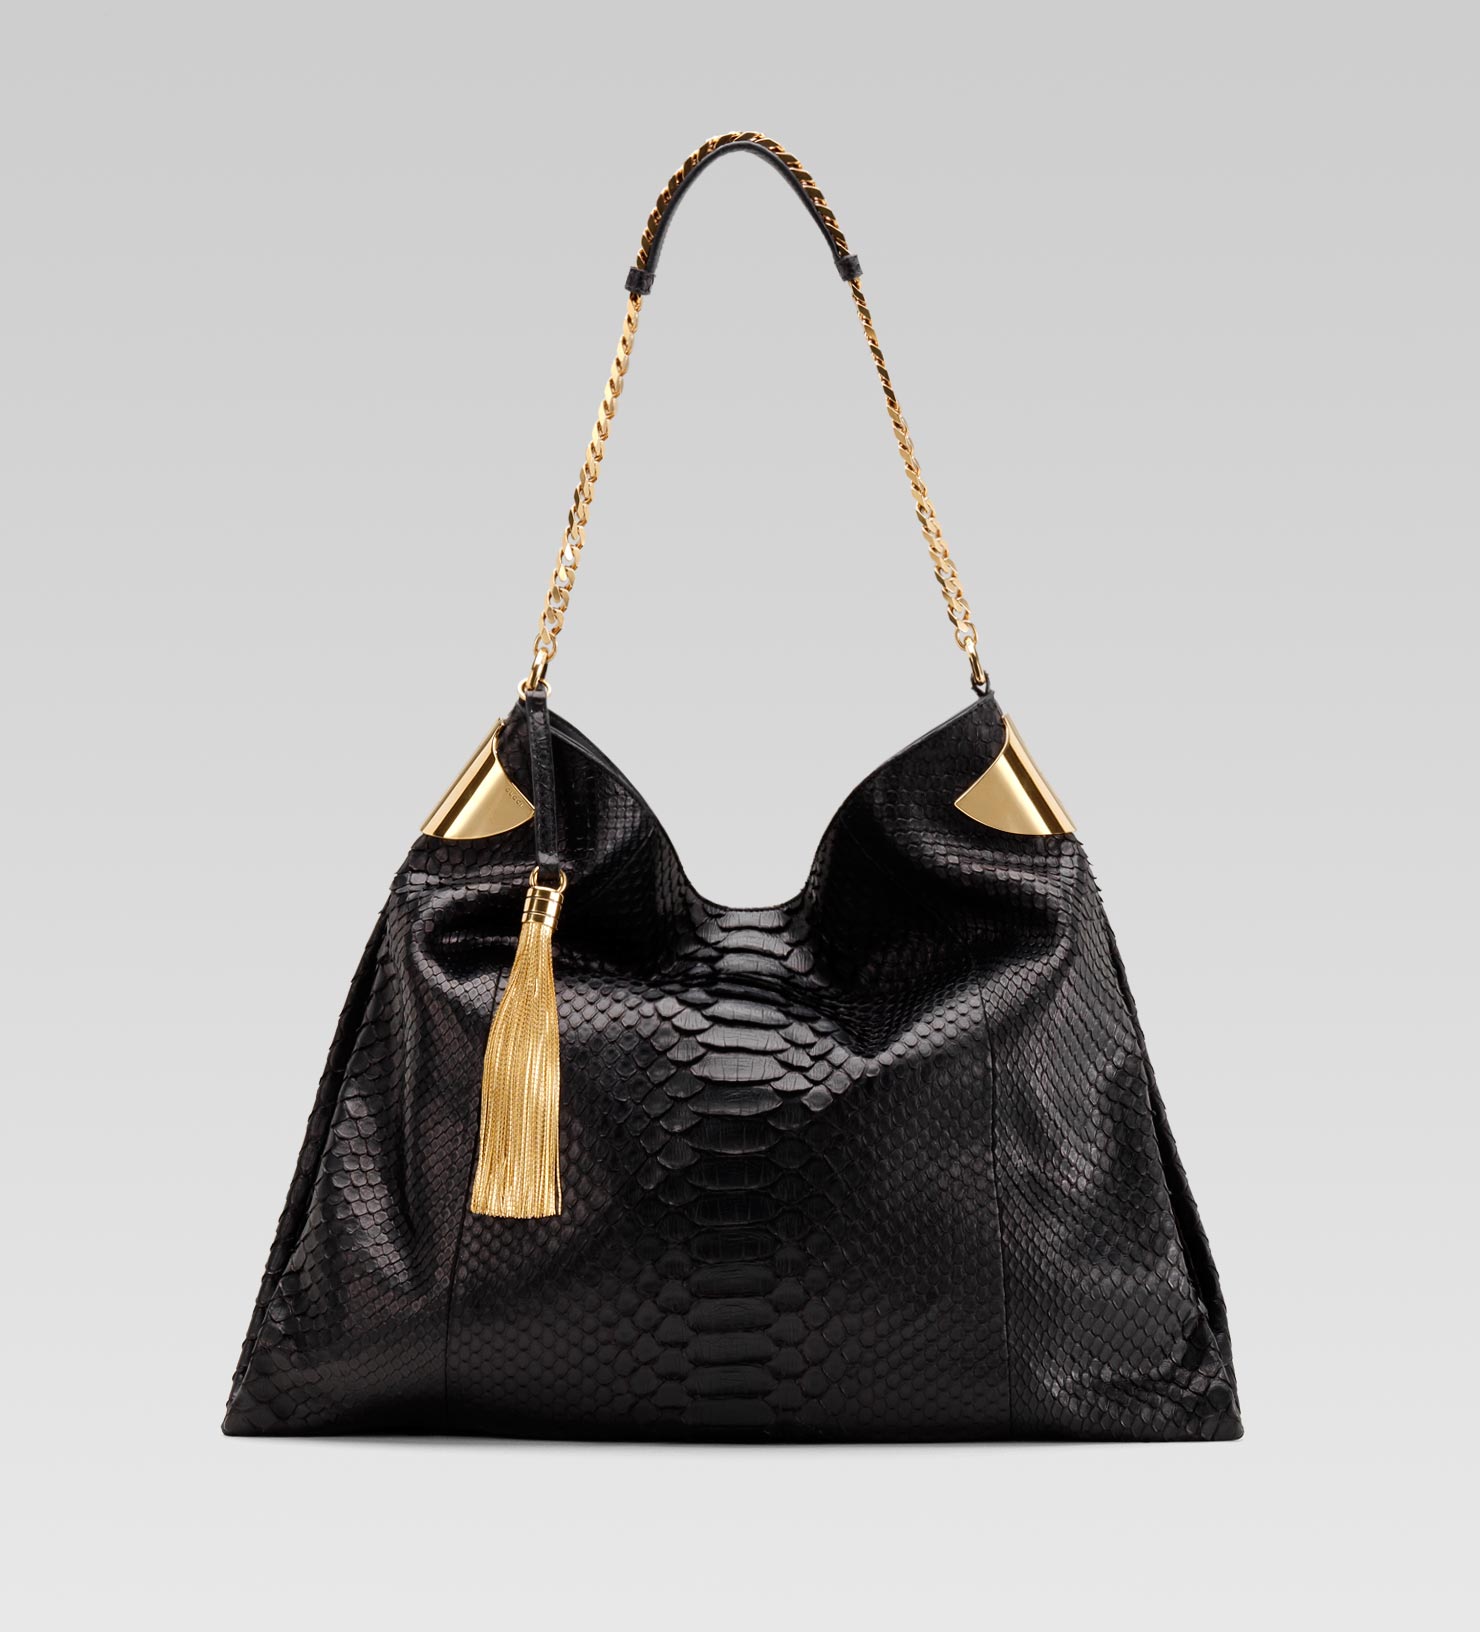 Lyst - Gucci Gucci Shoulder Bag in Black